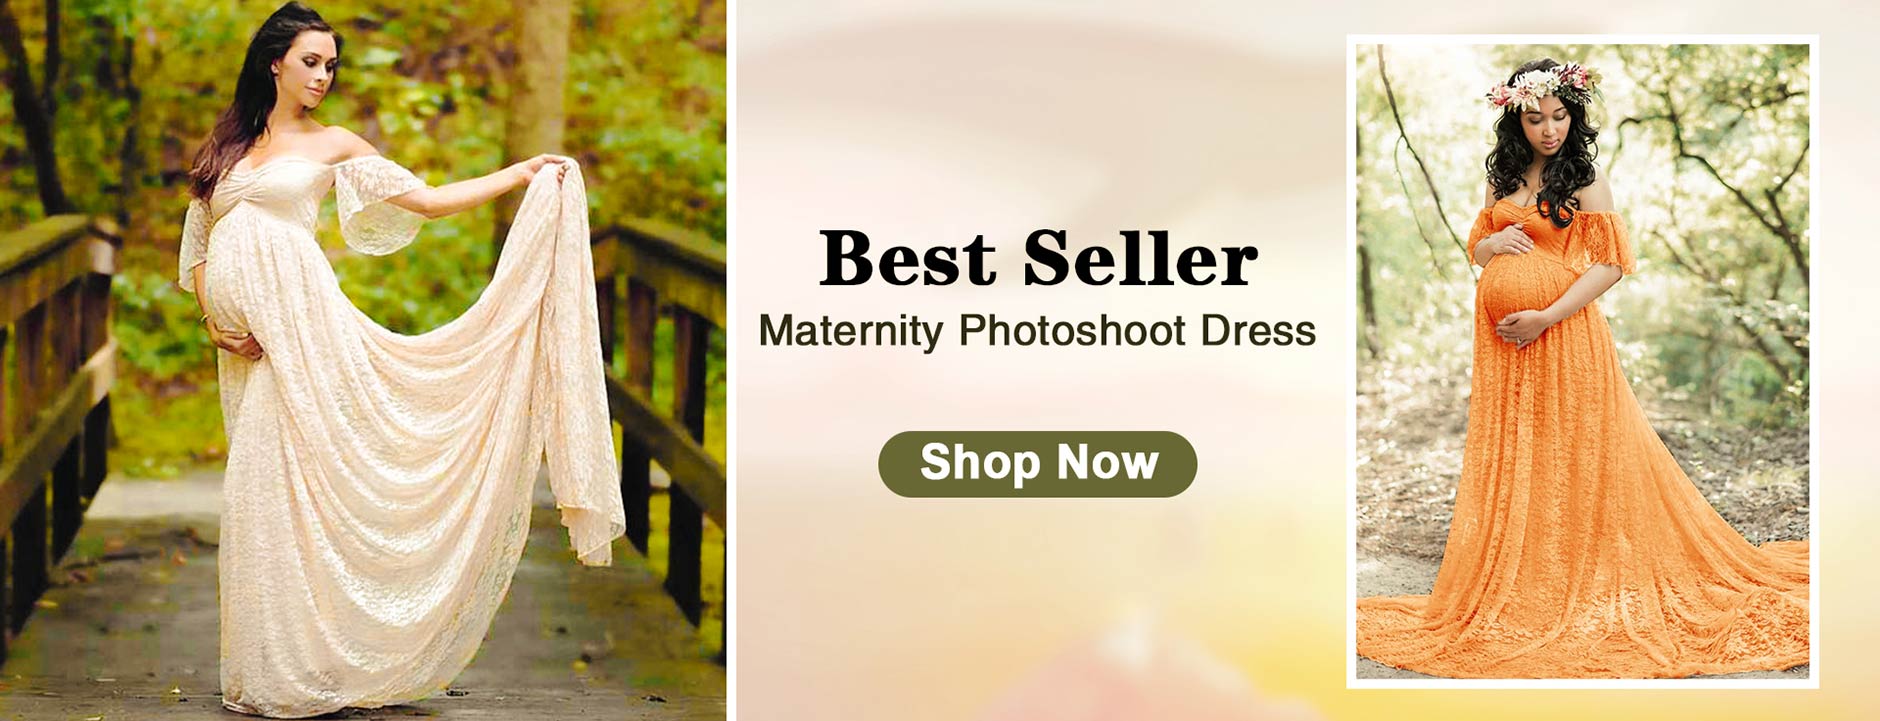 best maternity photoshoot dress